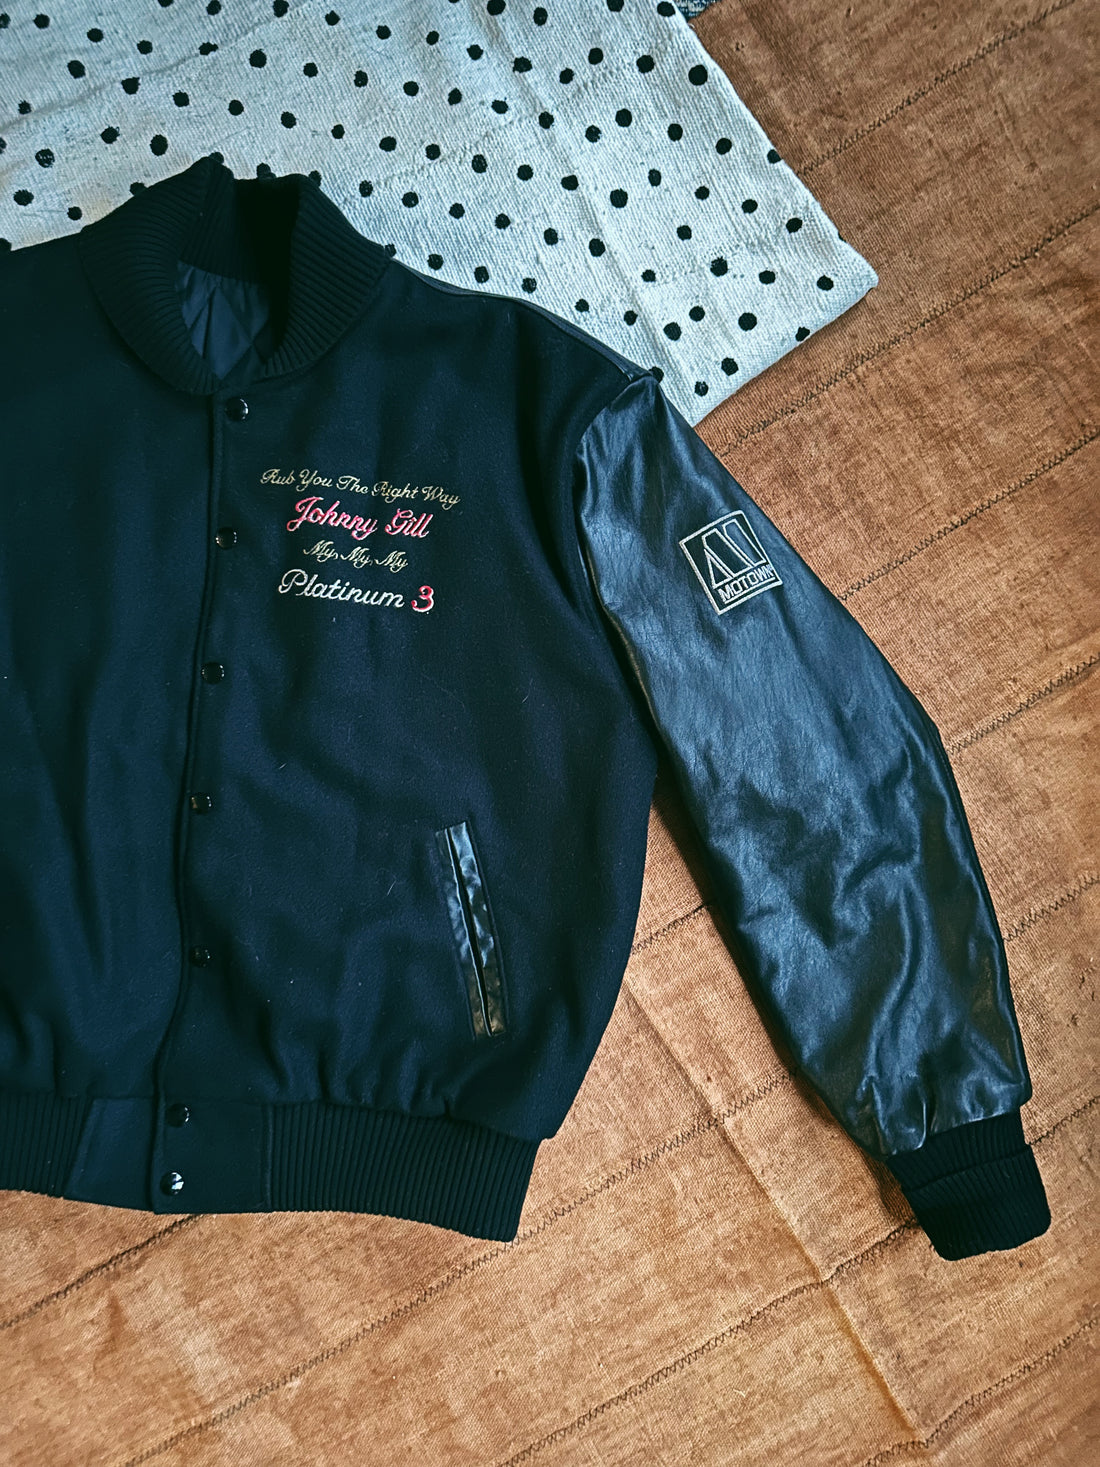 Vintage Johnny Gill - Platinum 2 Tour Crew Jacket